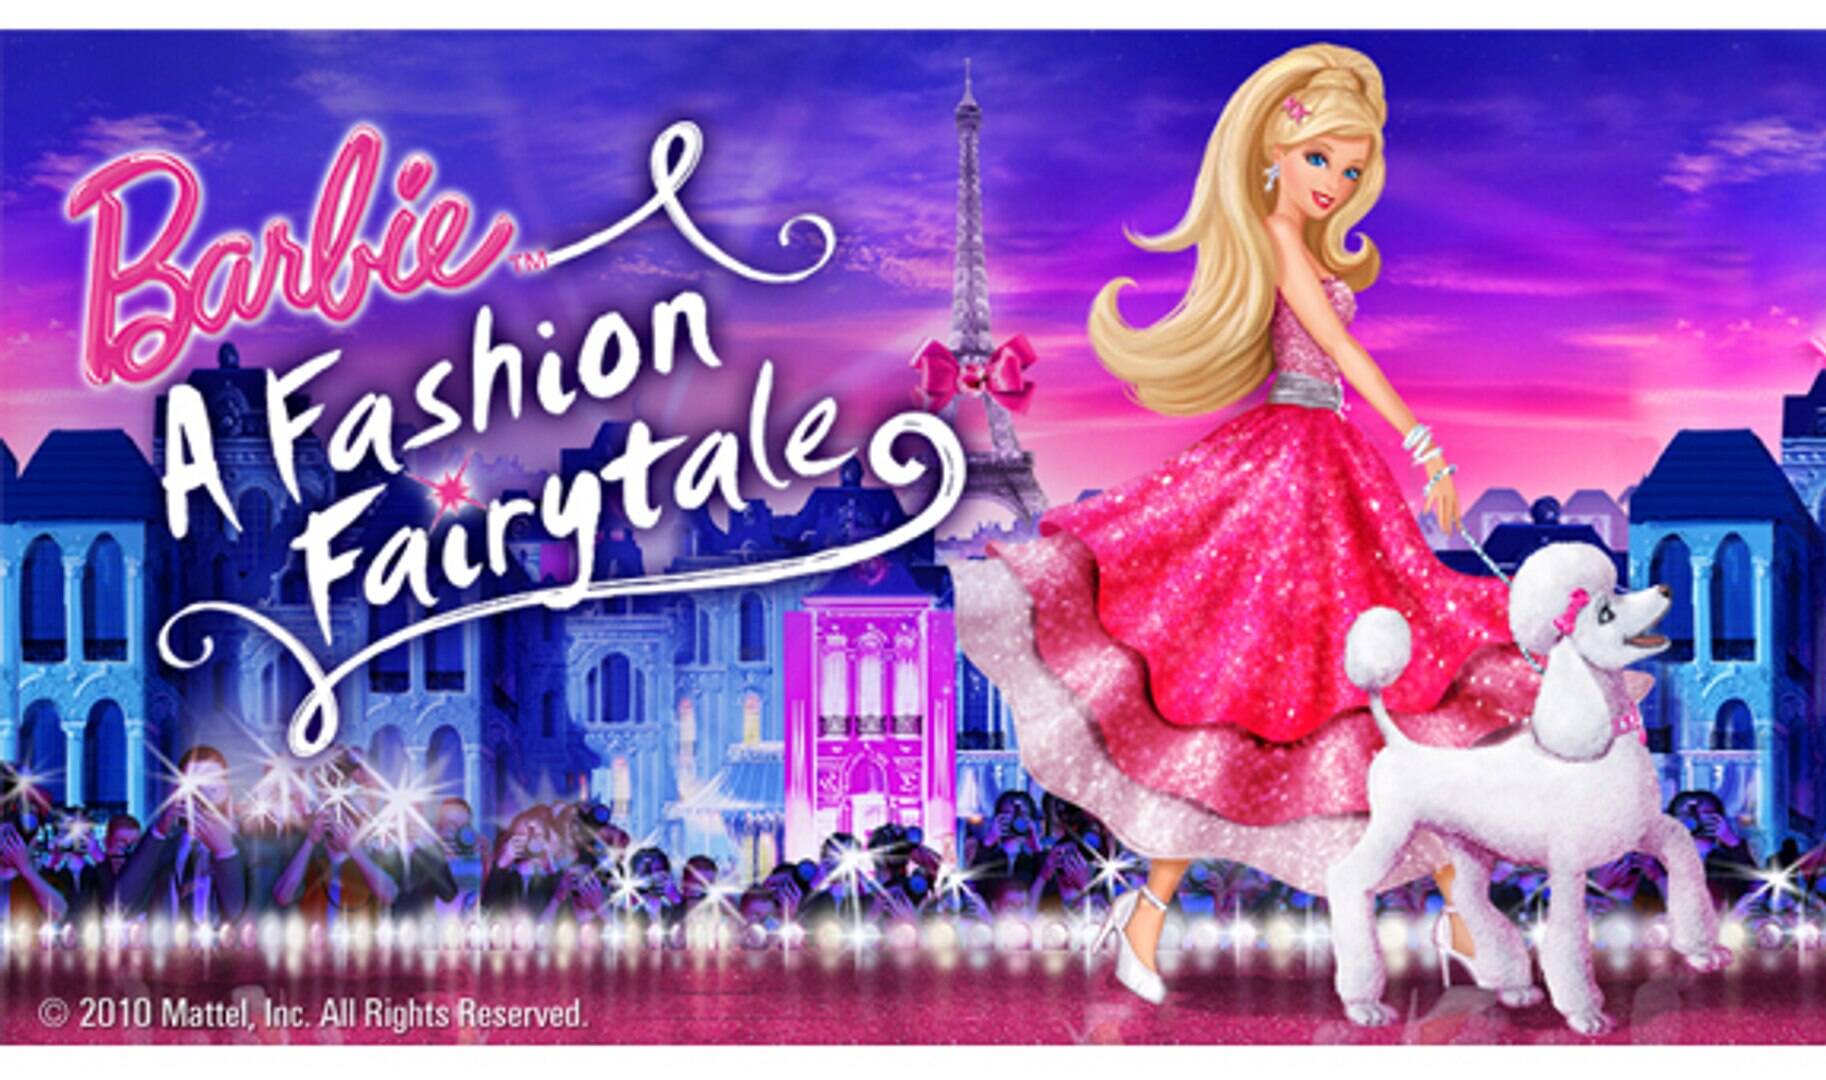 Барби Fashion Fairytale